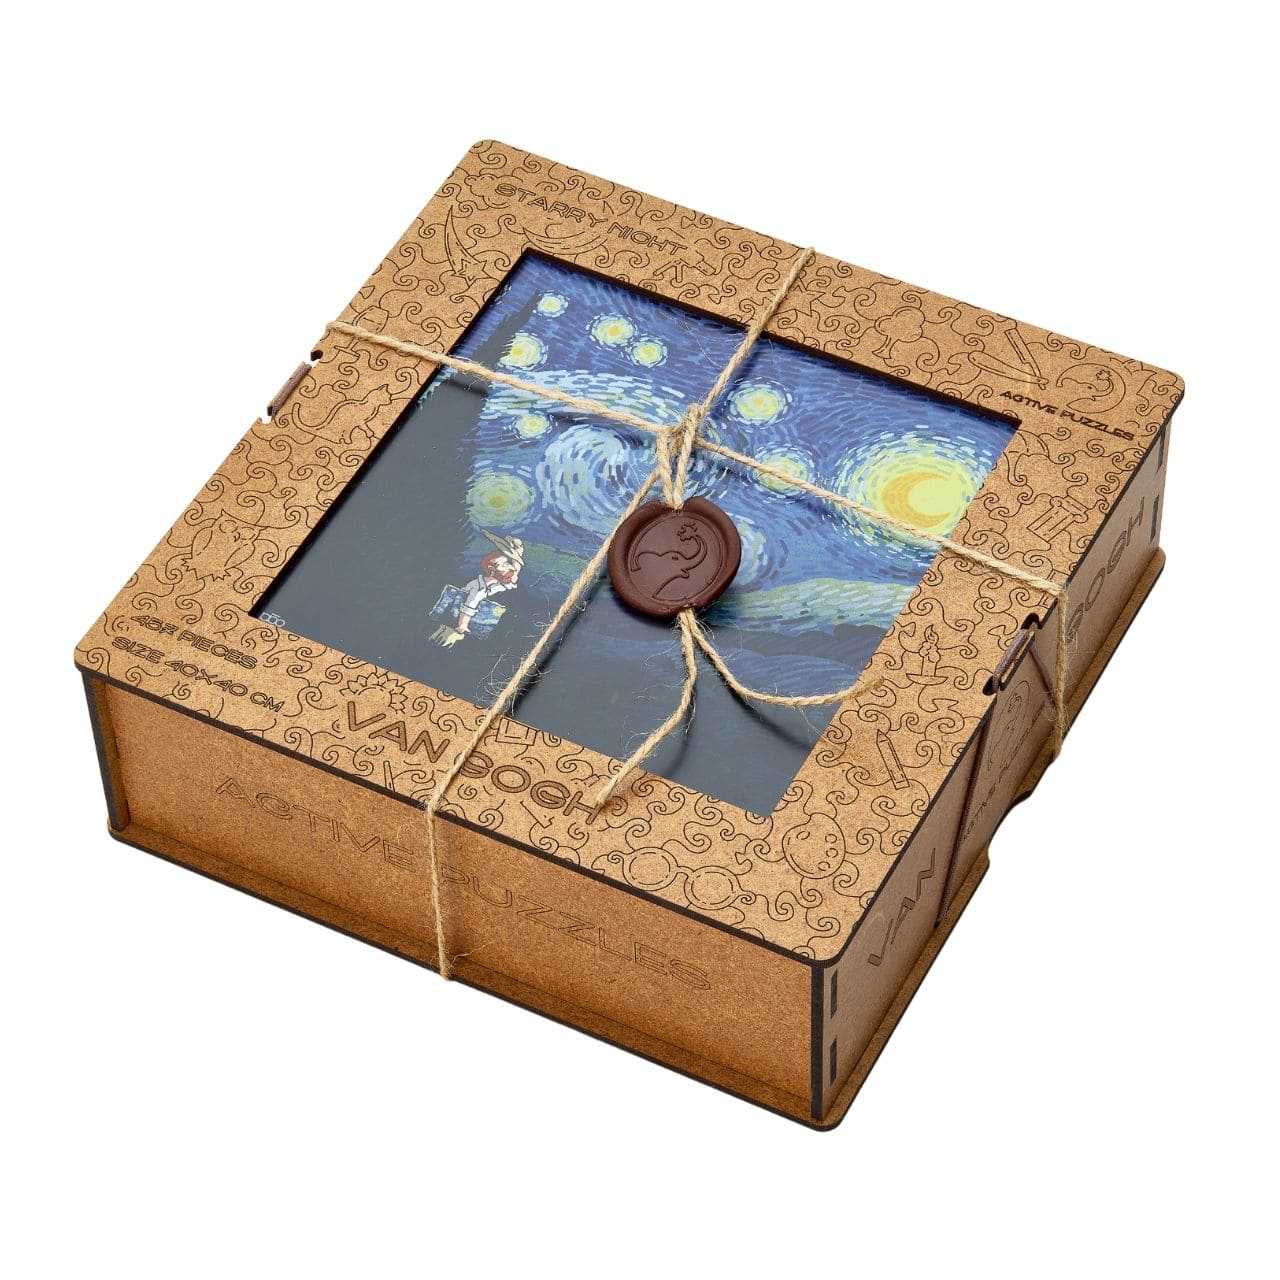 Bound Vangogh Wooden Puzzles Box